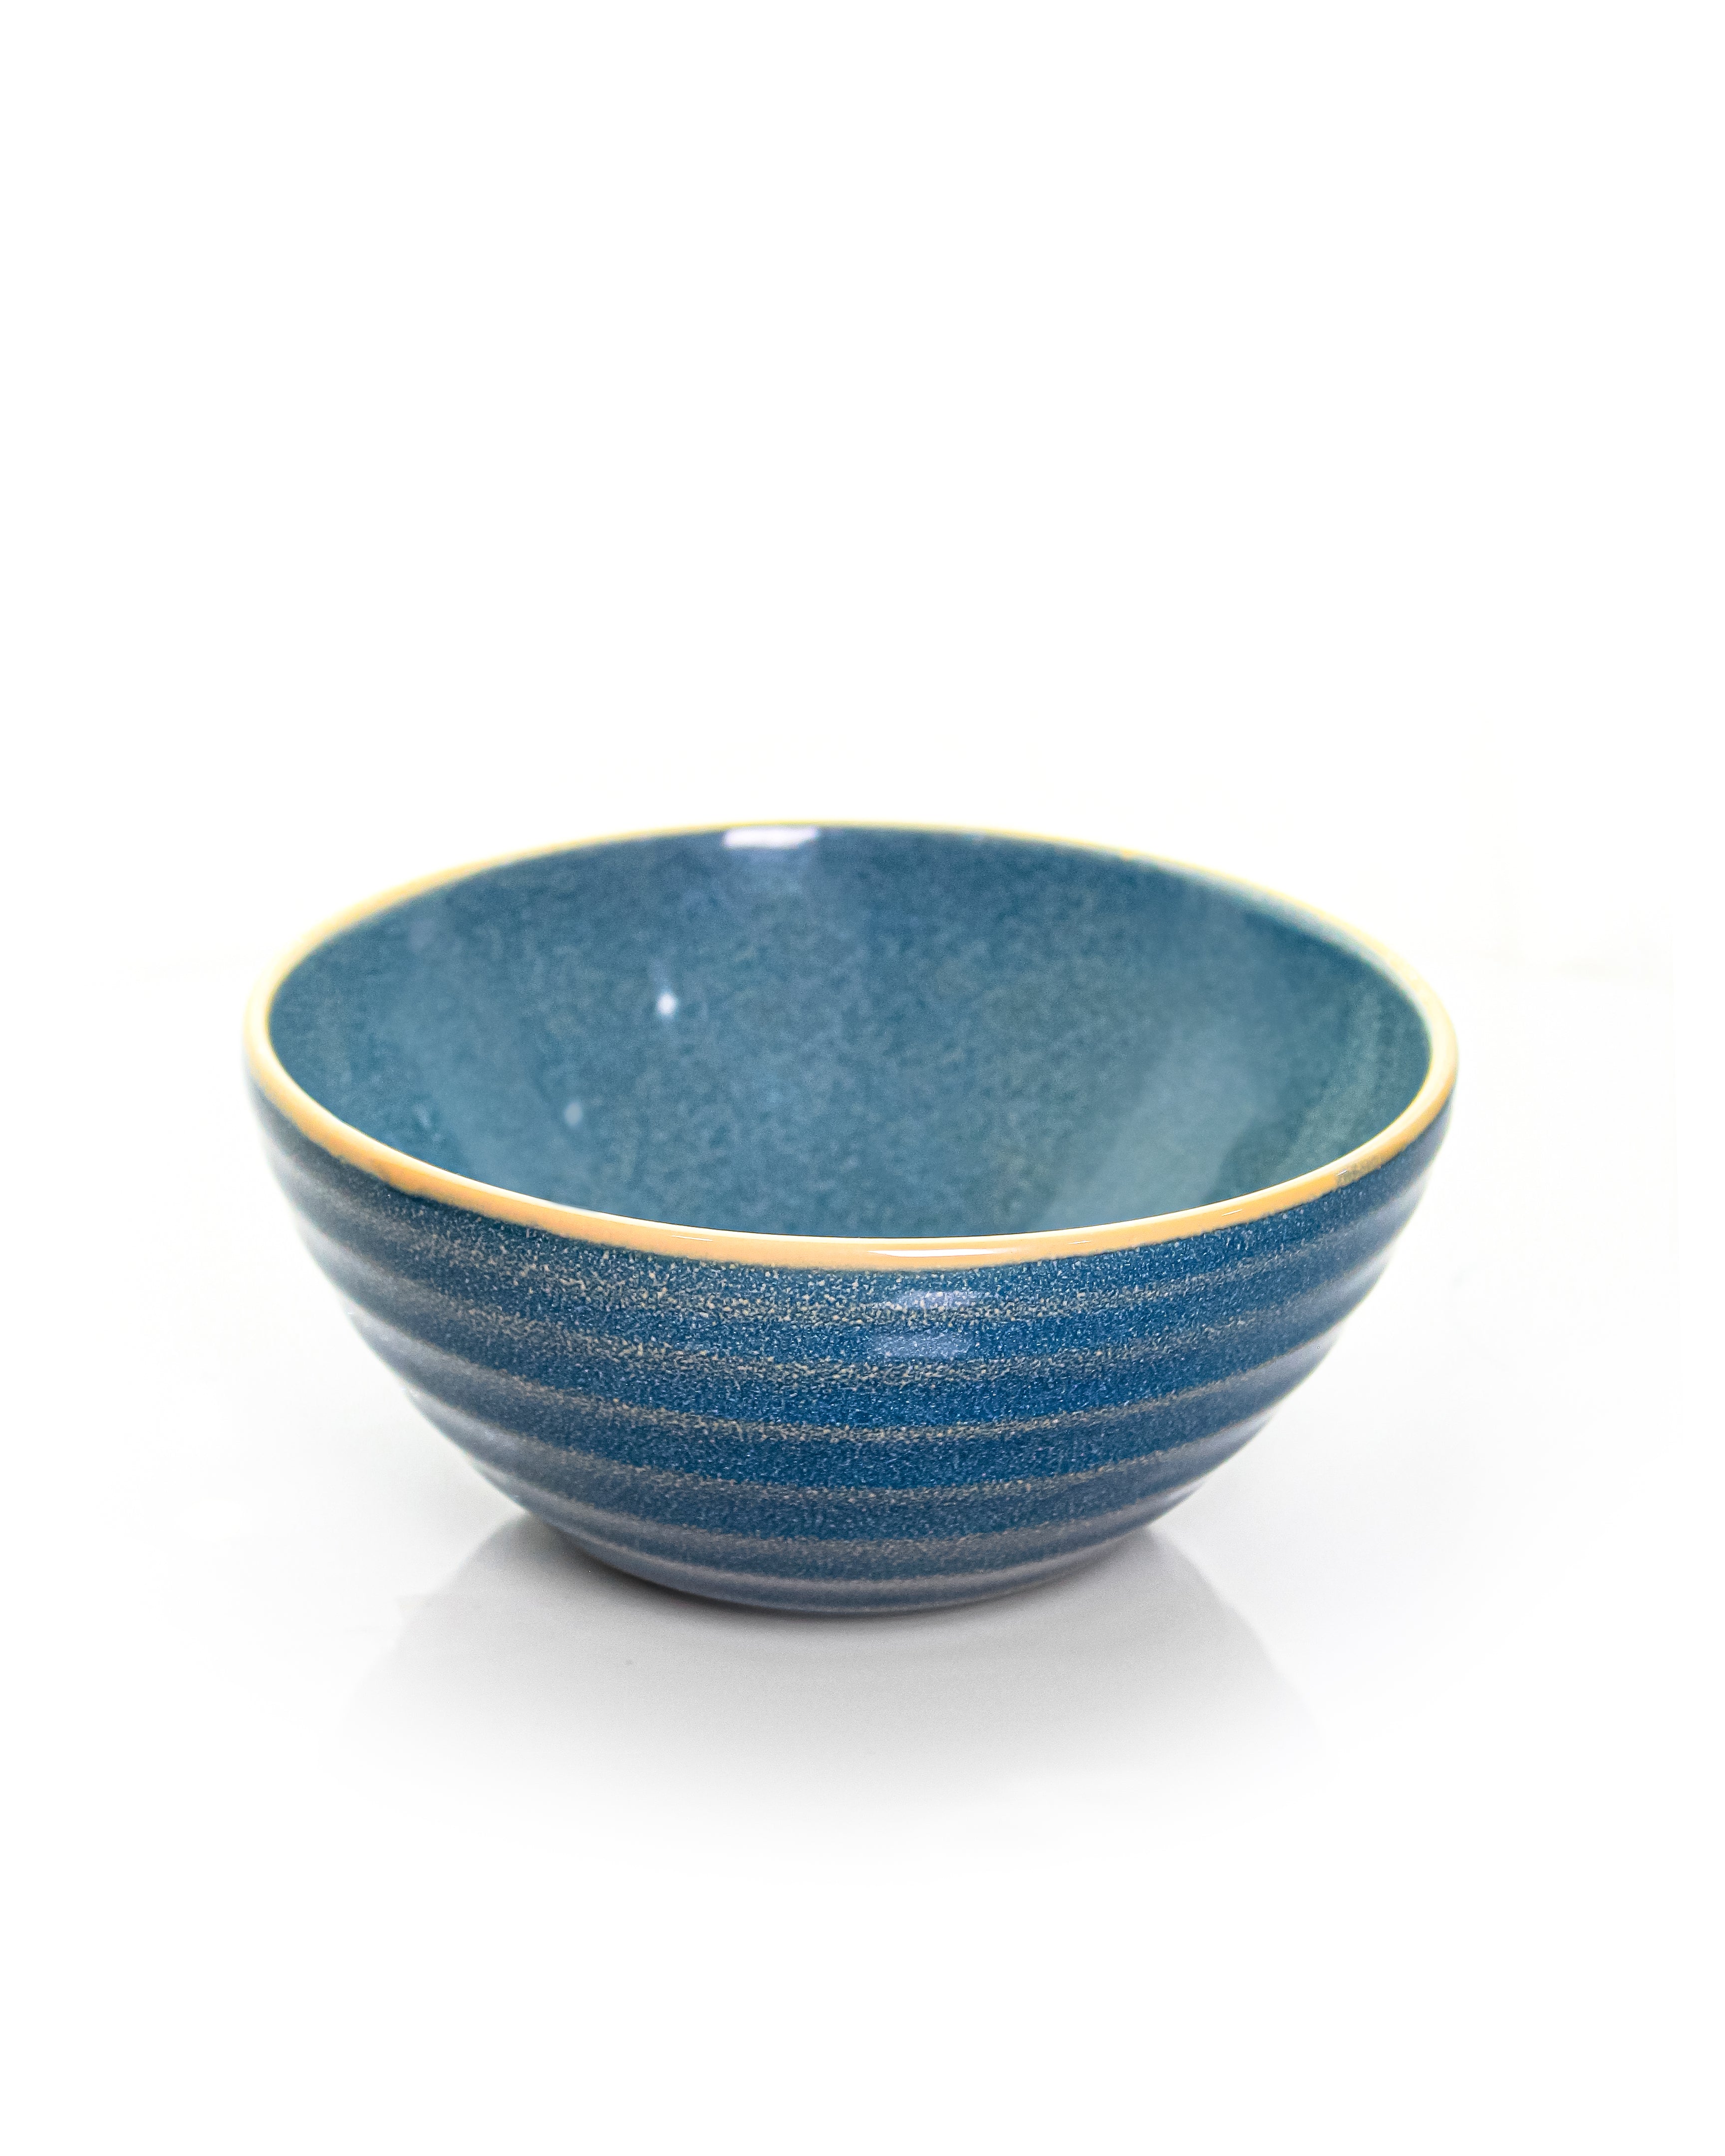 Medium teal || Organic big bowl - Set of 2